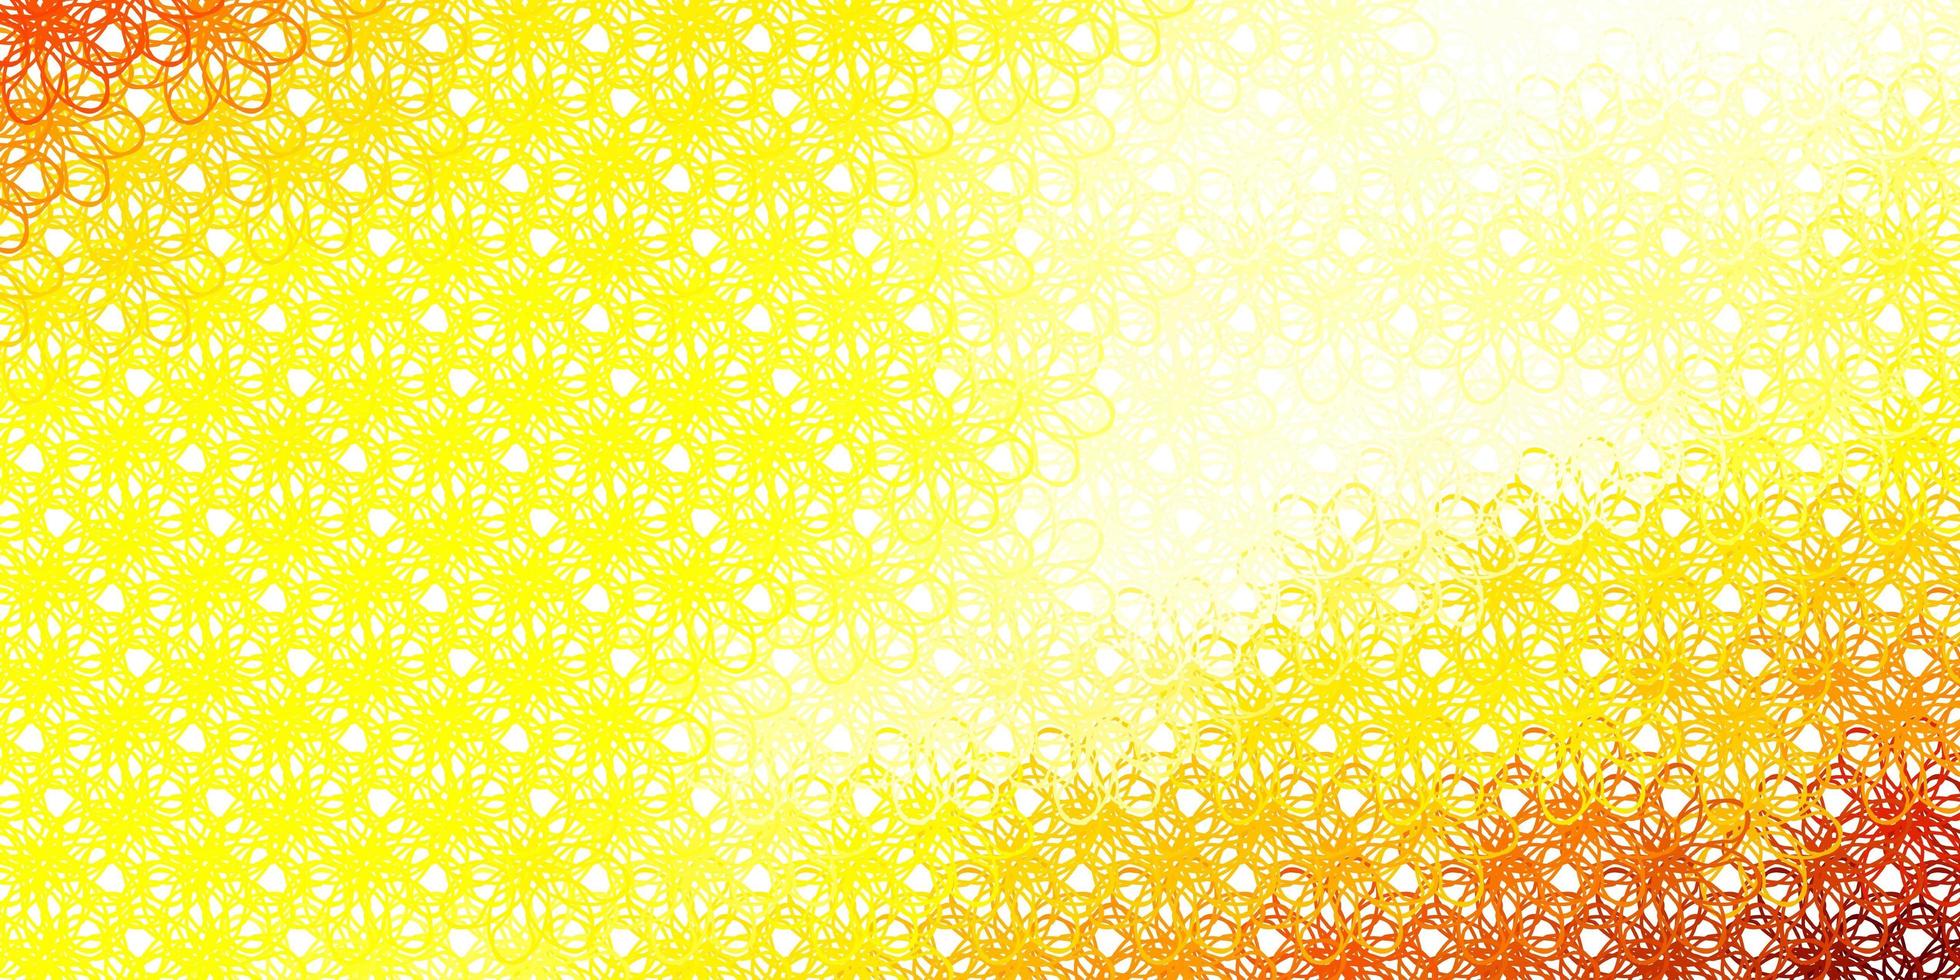 Fondo de vector amarillo claro con líneas dobladas.